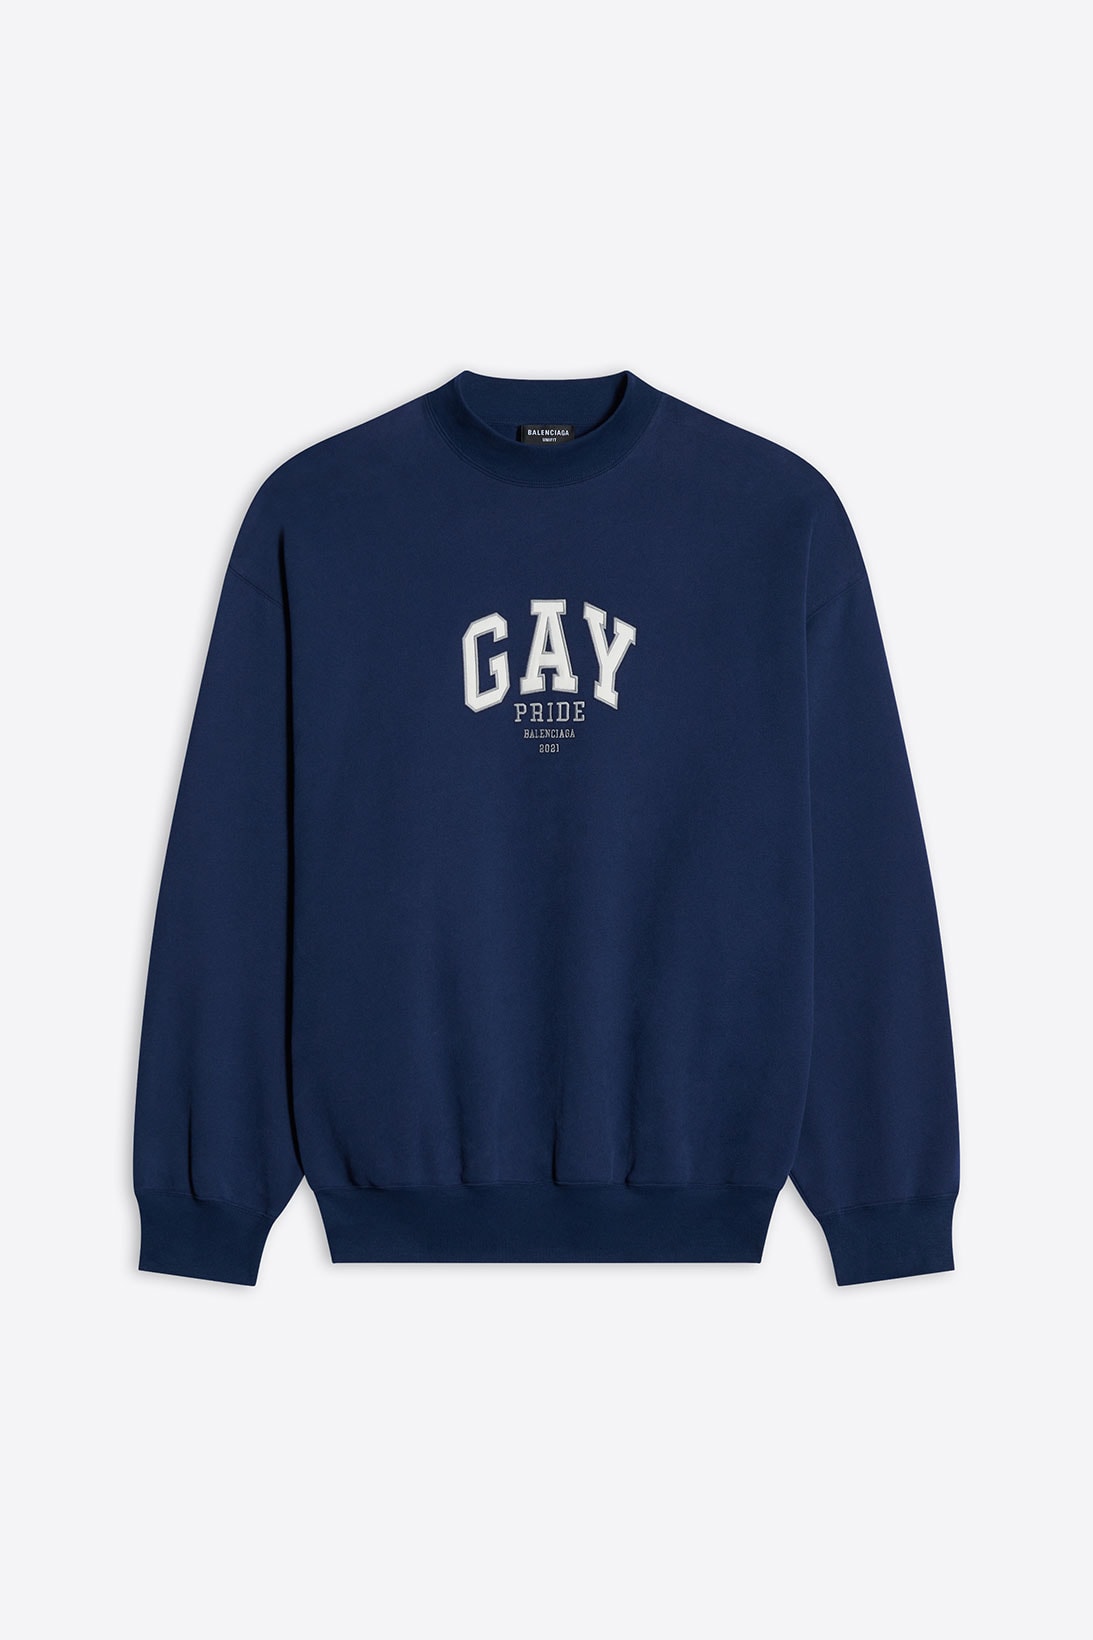 balenciaga pre-fall 2021 collection pride month capsule sweatshirt